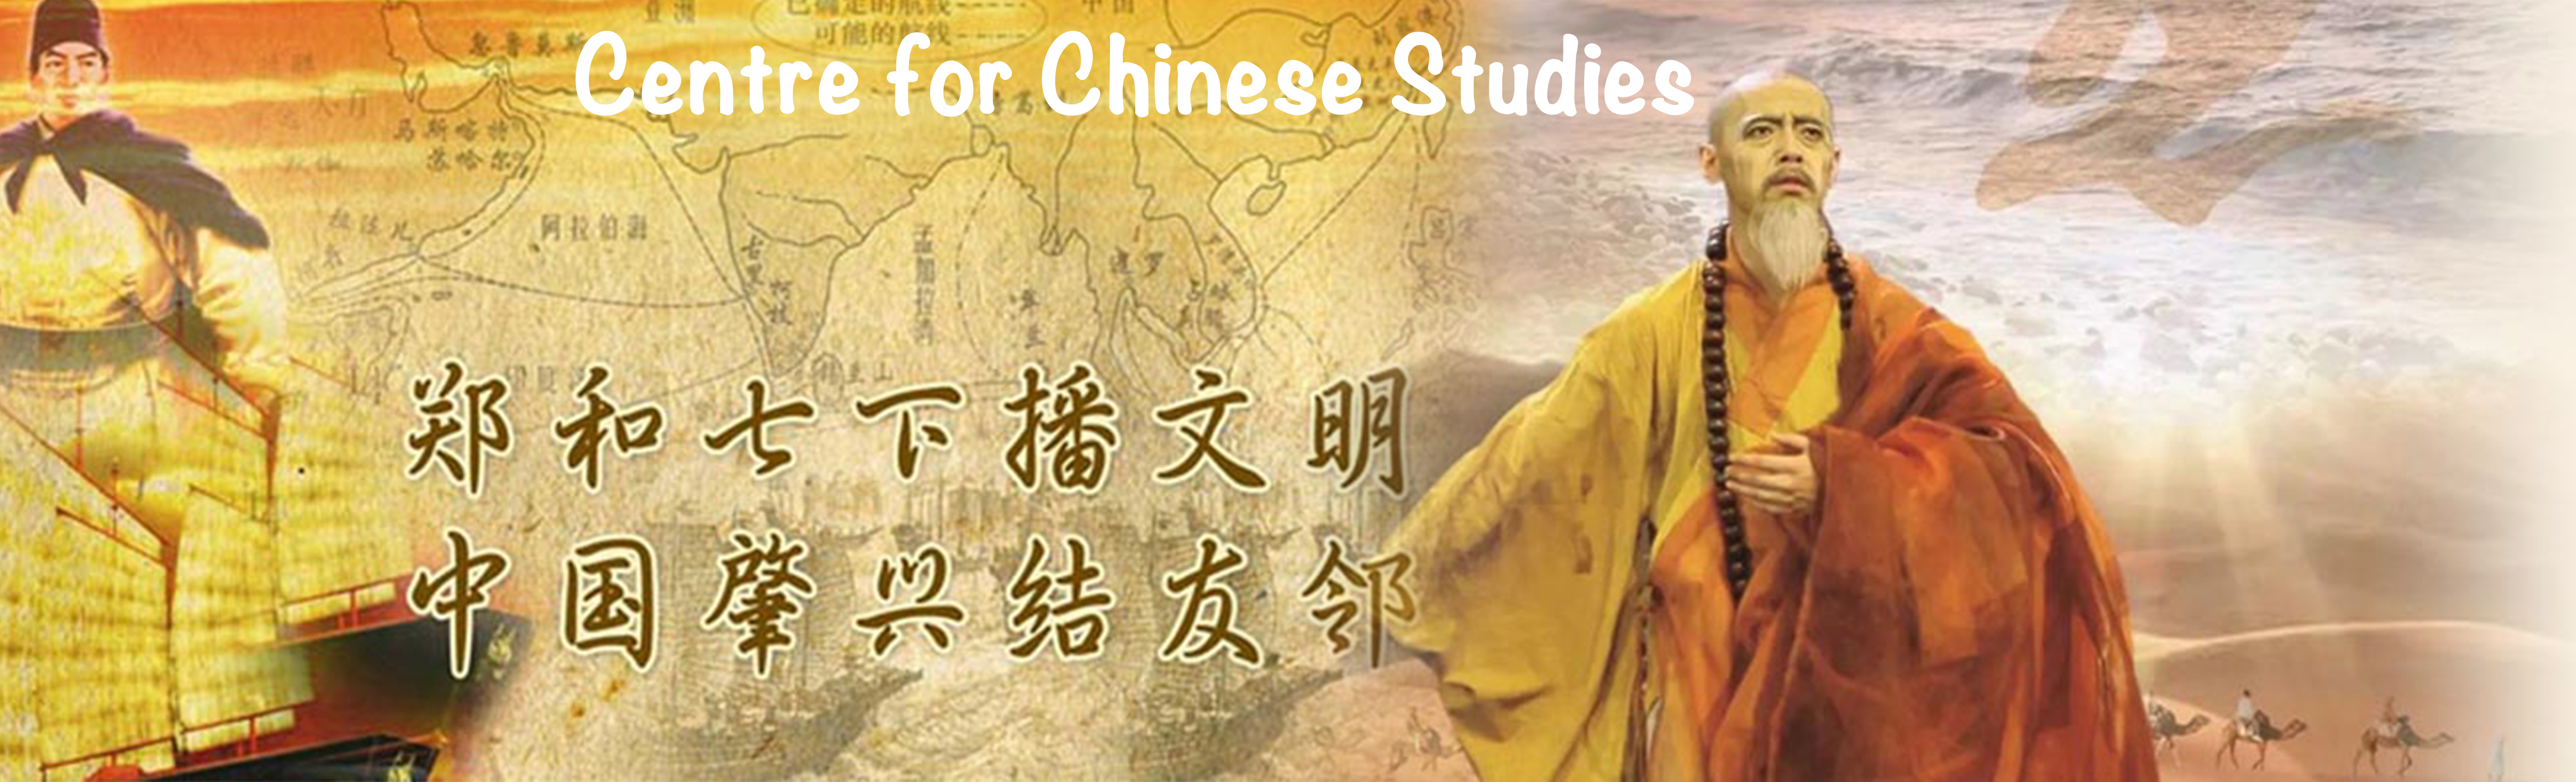 法显法师 他是中国佛教历史上的一位名僧叫法显（334年-420年）。他按丝绸之路传过来尼泊尔、印度、斯里兰卡为了领取一些佛教方面的古籍。后来他把尼泊尔、印度与斯里兰卡的有些佛教古籍翻译成中文了。因为法显在国外翻译佛教古籍14余年，所以佛教文化引入中国，对中国历史、文化产生很大影响。  The Chinese Buddhist monk named Faxian, (344-420) visited to Buddhist sites such as Nepal, India, Sri Lanka through the Silk route in search of Buddhist books of discipline. He has stayed in Buddhist sites for 14 years and translated the Buddhist books in to Chinese language, so that the Buddhist culture added a big value to the history and culture of China. His journey is one of the main points in Chinese and Sri Lanka’s relationship history.